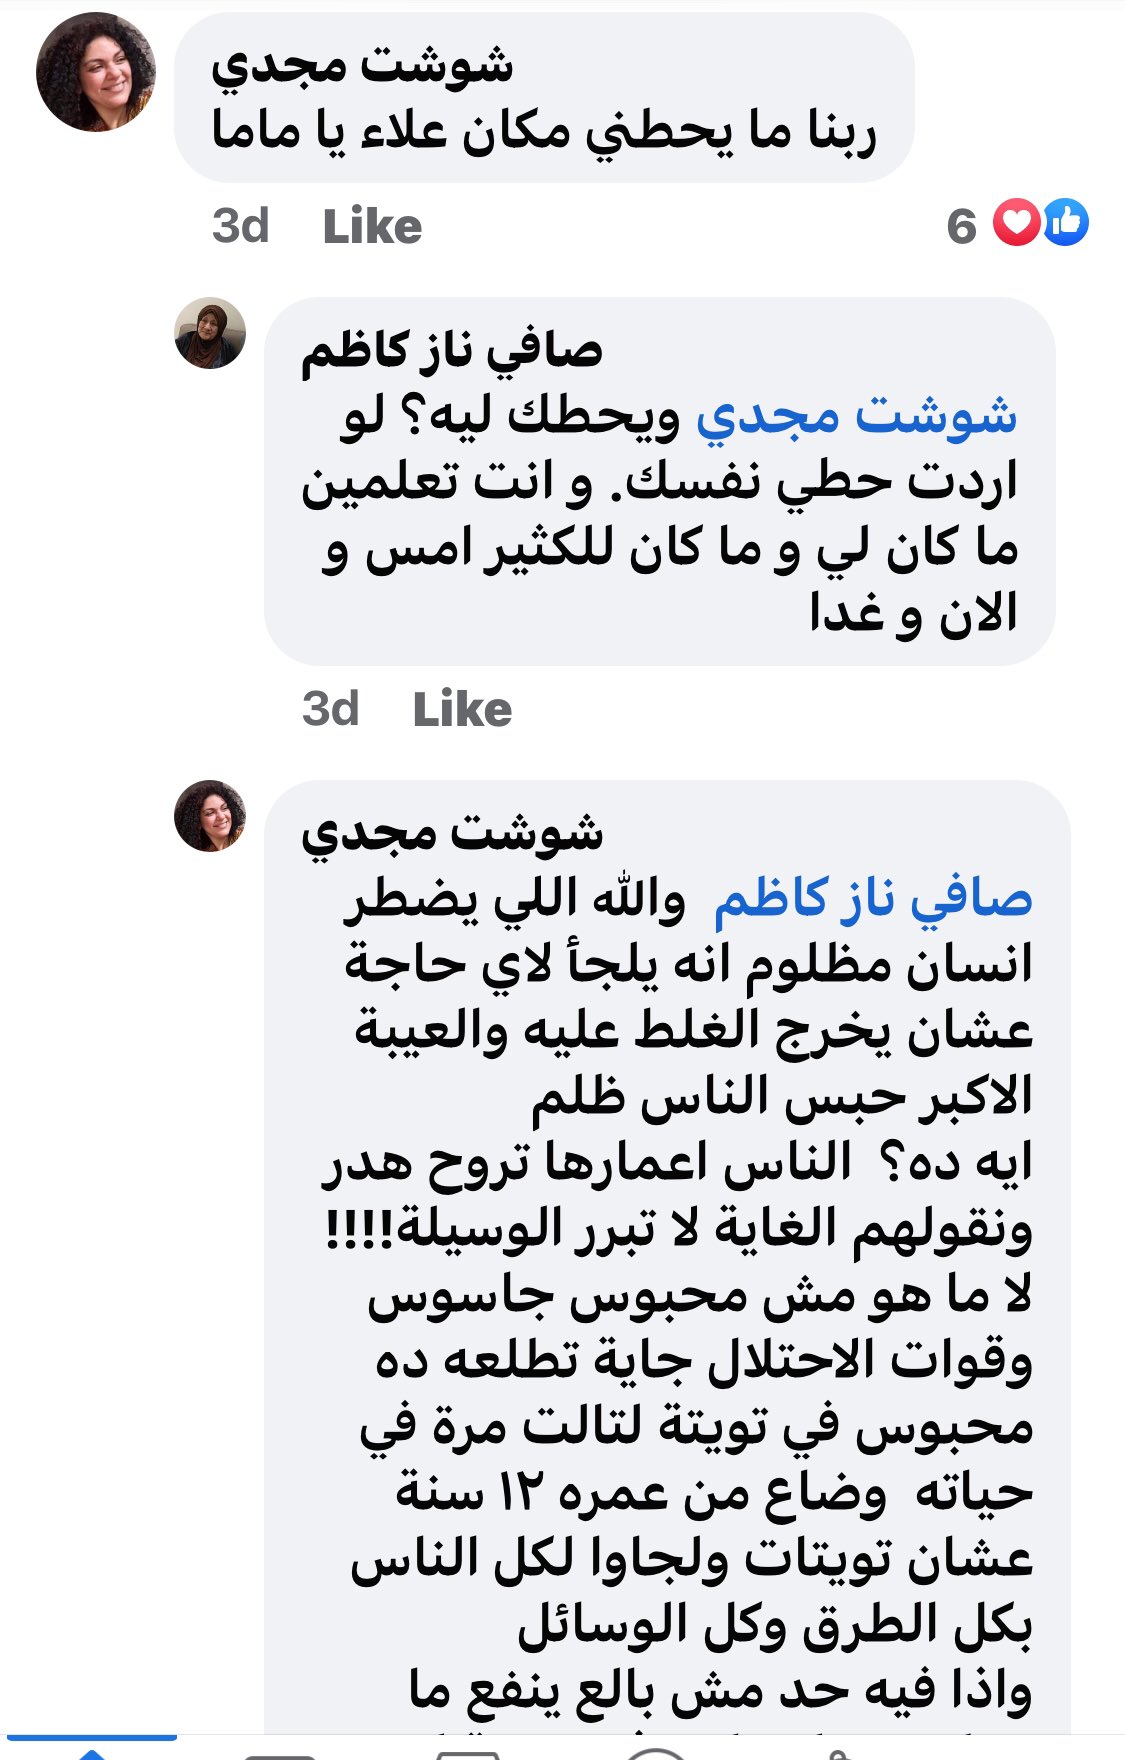 Emanyoussif On Twitter صافيناز كاظم والدة نوارة نجم خرجت عن السرب وده 